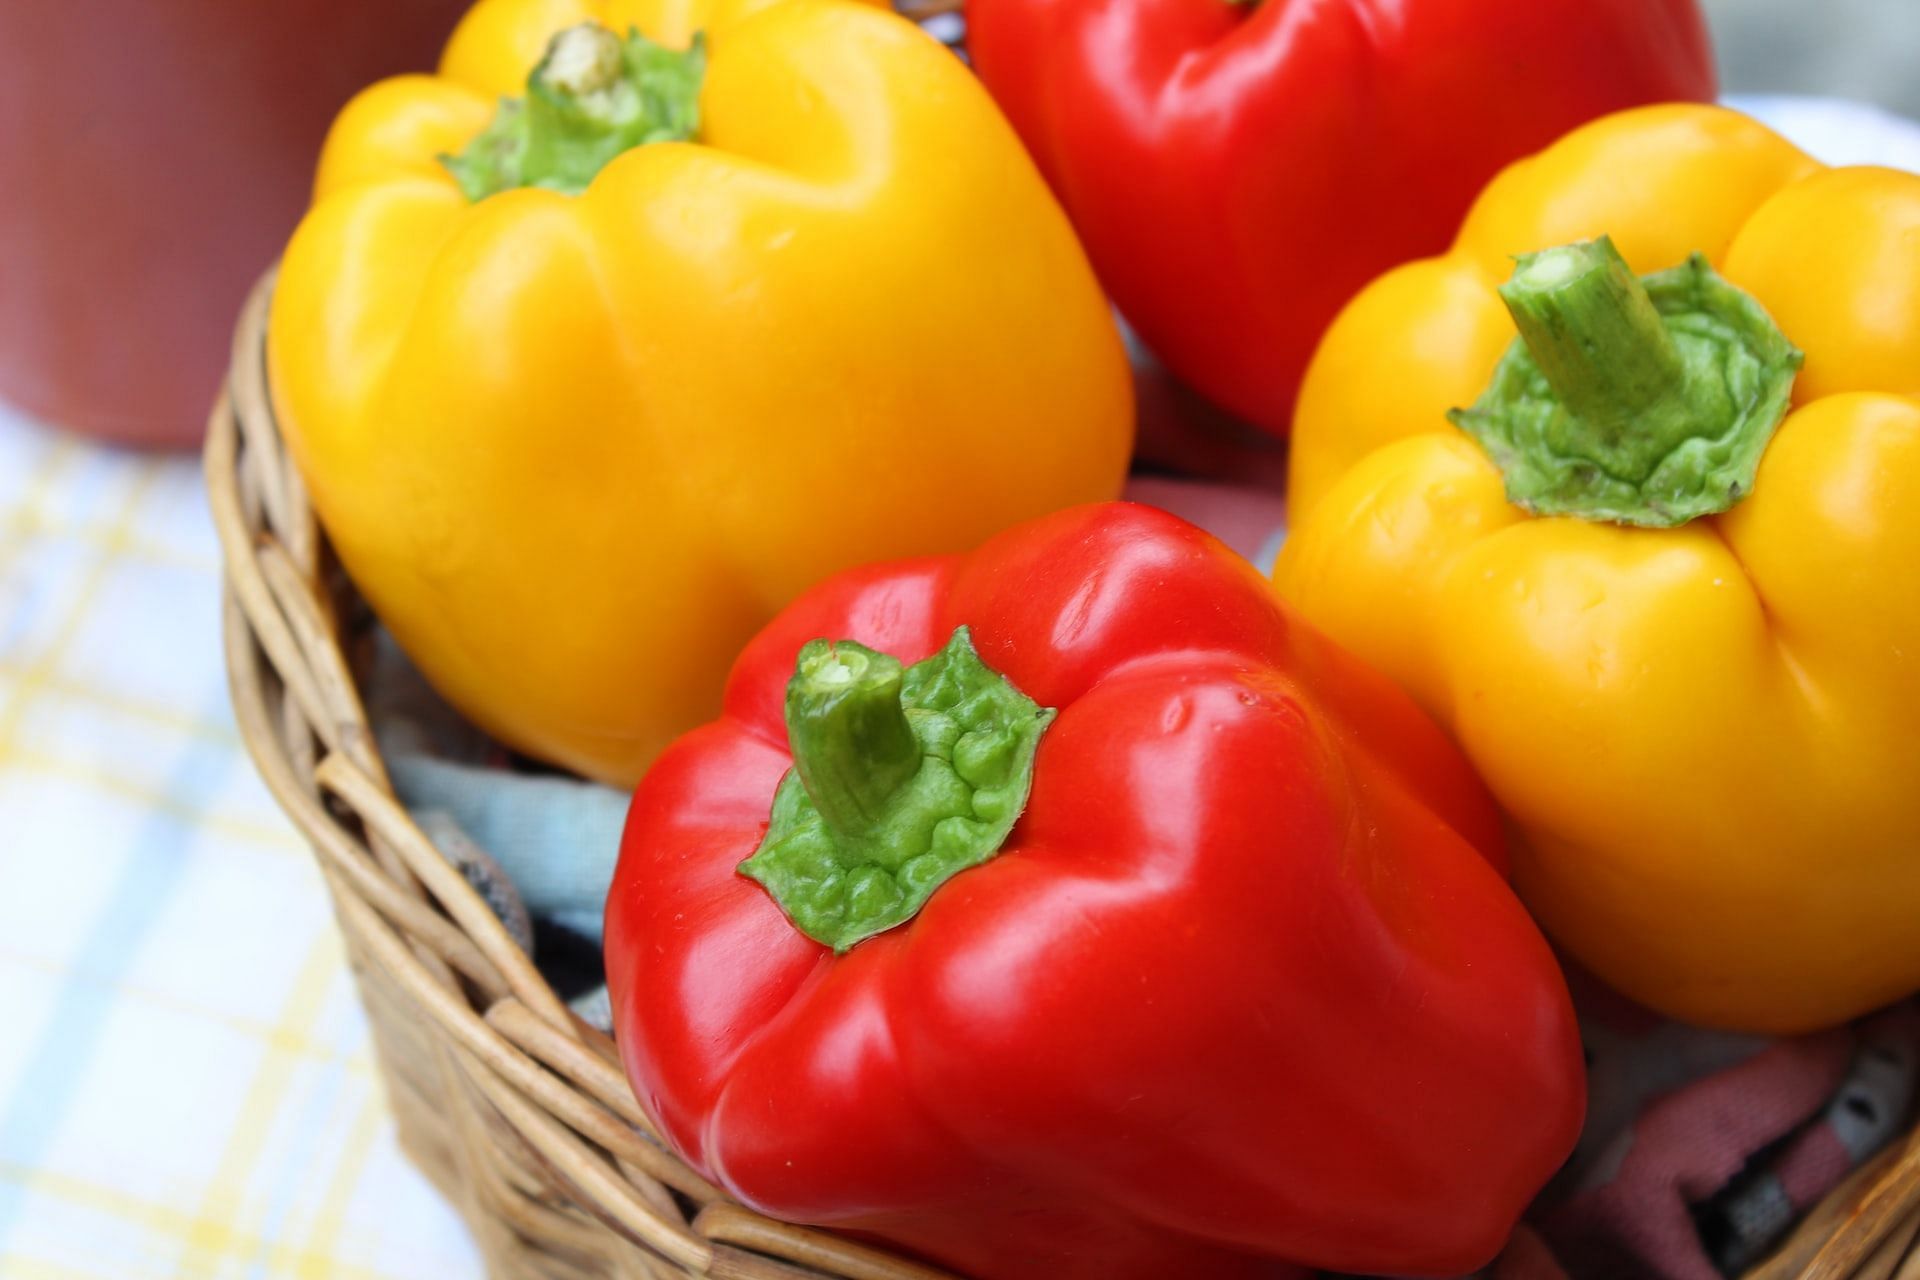 Consuming sweet pepper prevents eye disease. (Photo via Unsplash/Rens D)